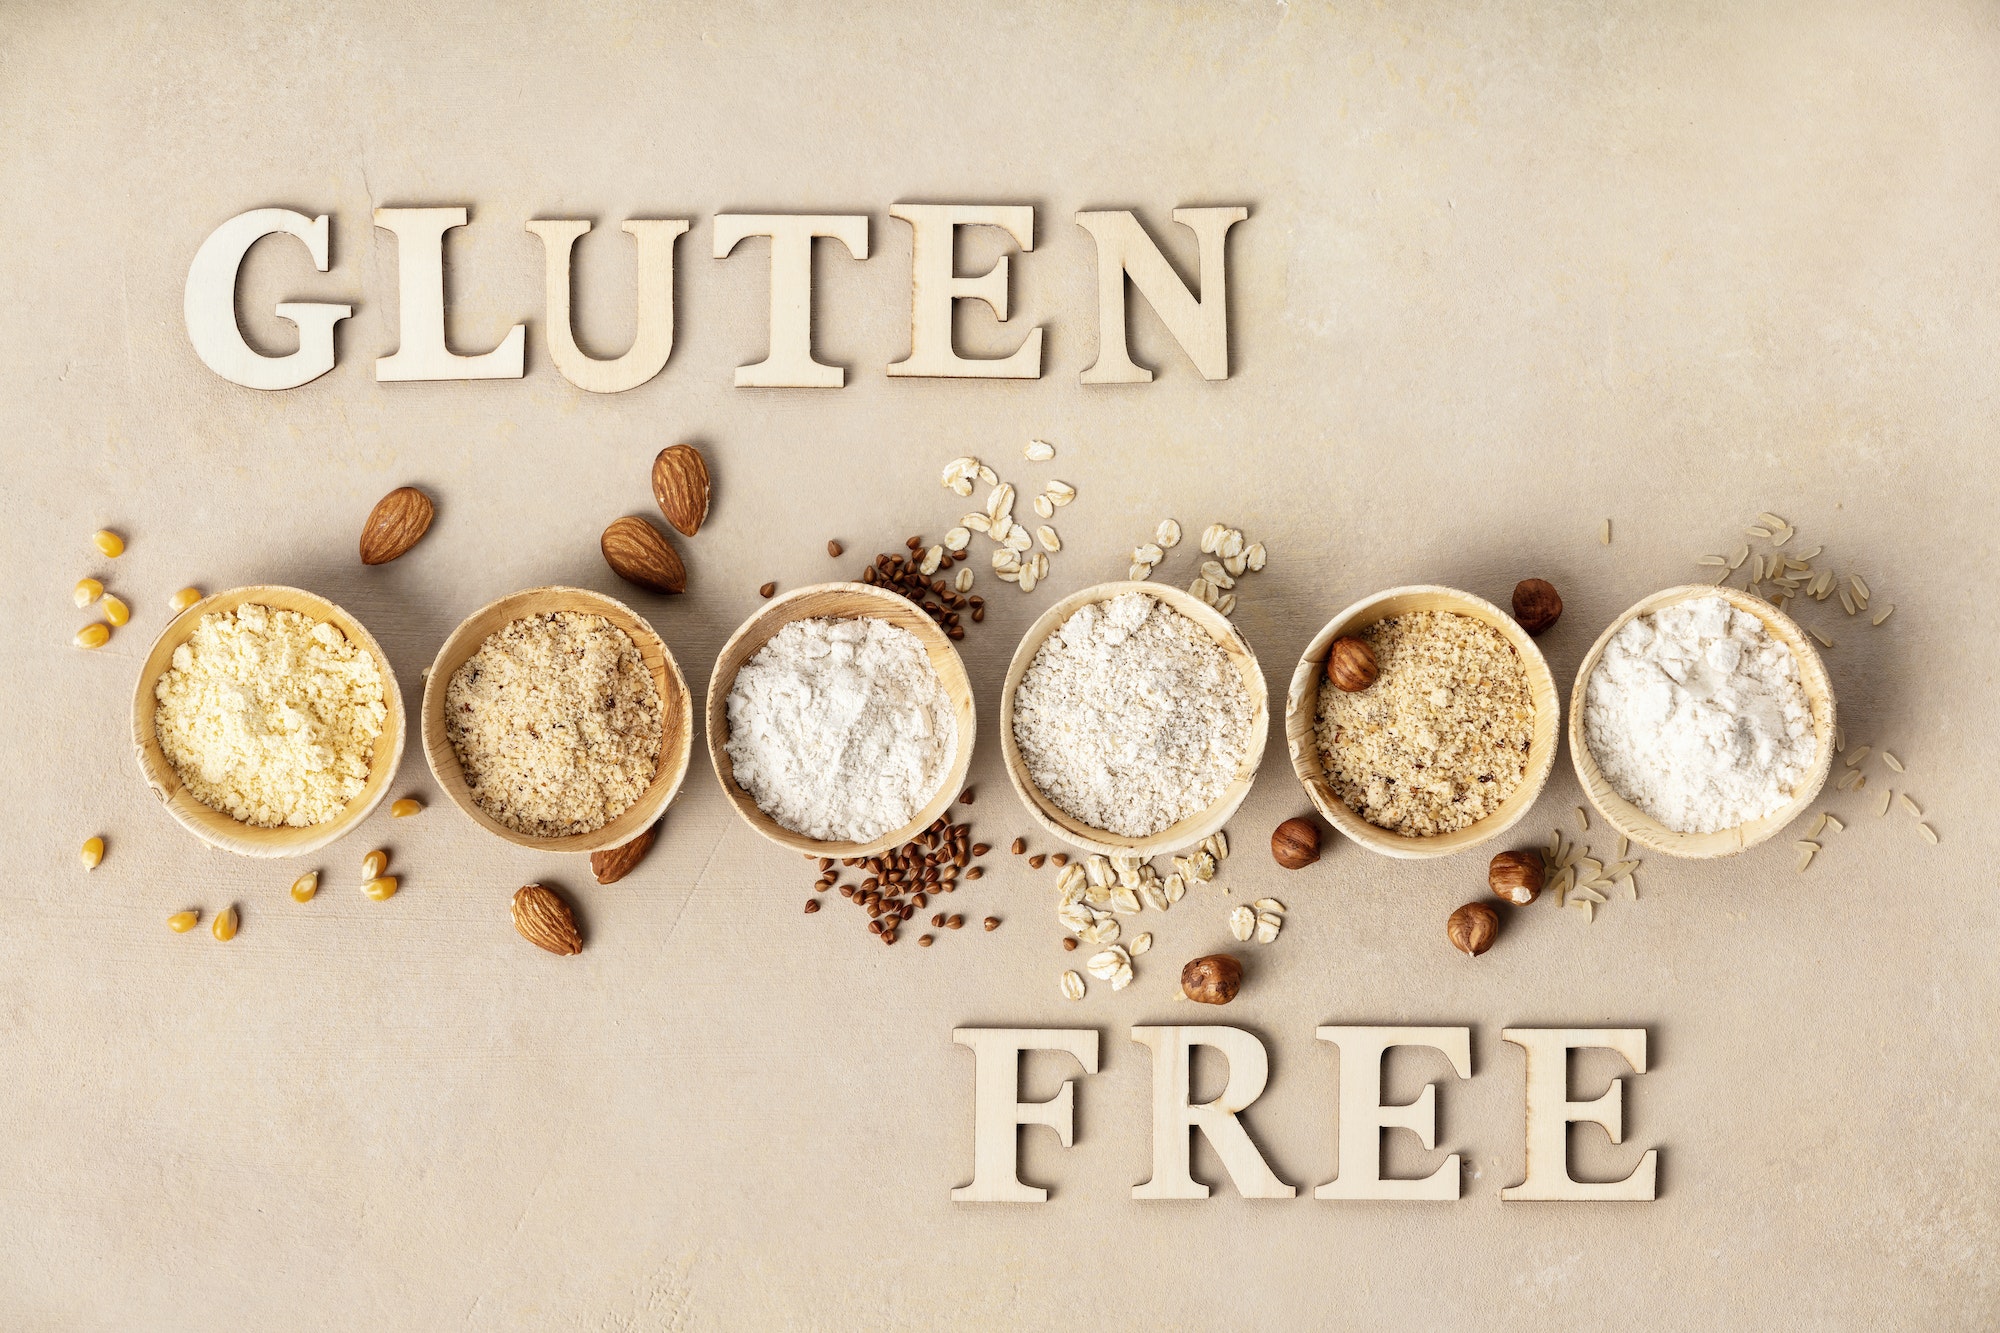 Various gluten free flour